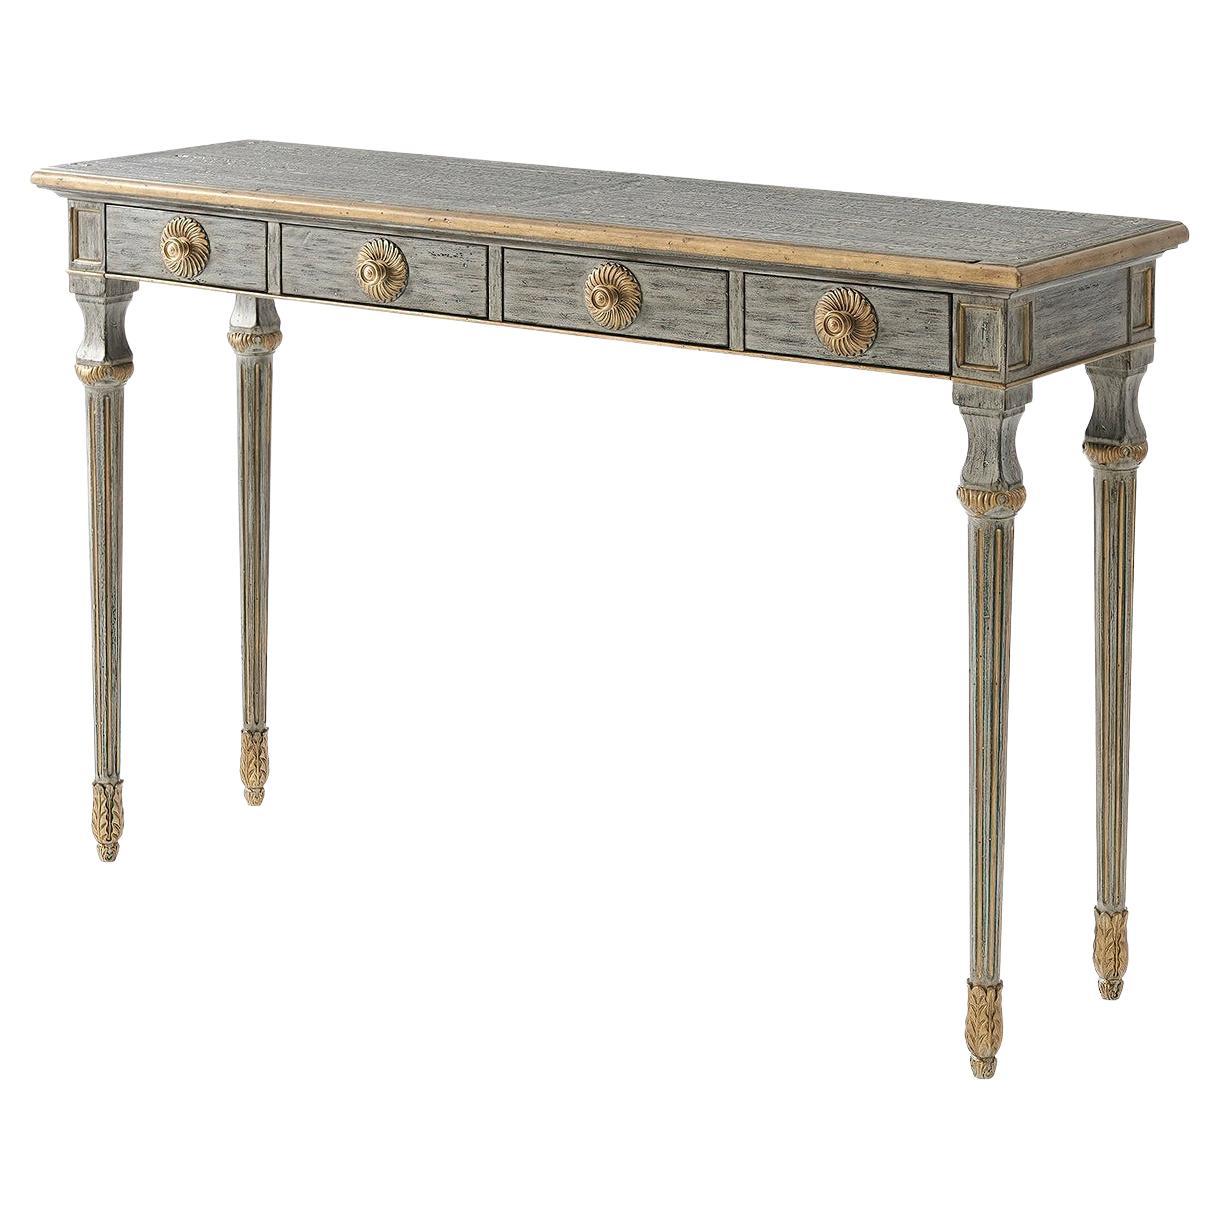 Table console de style campagnard peinte en gris